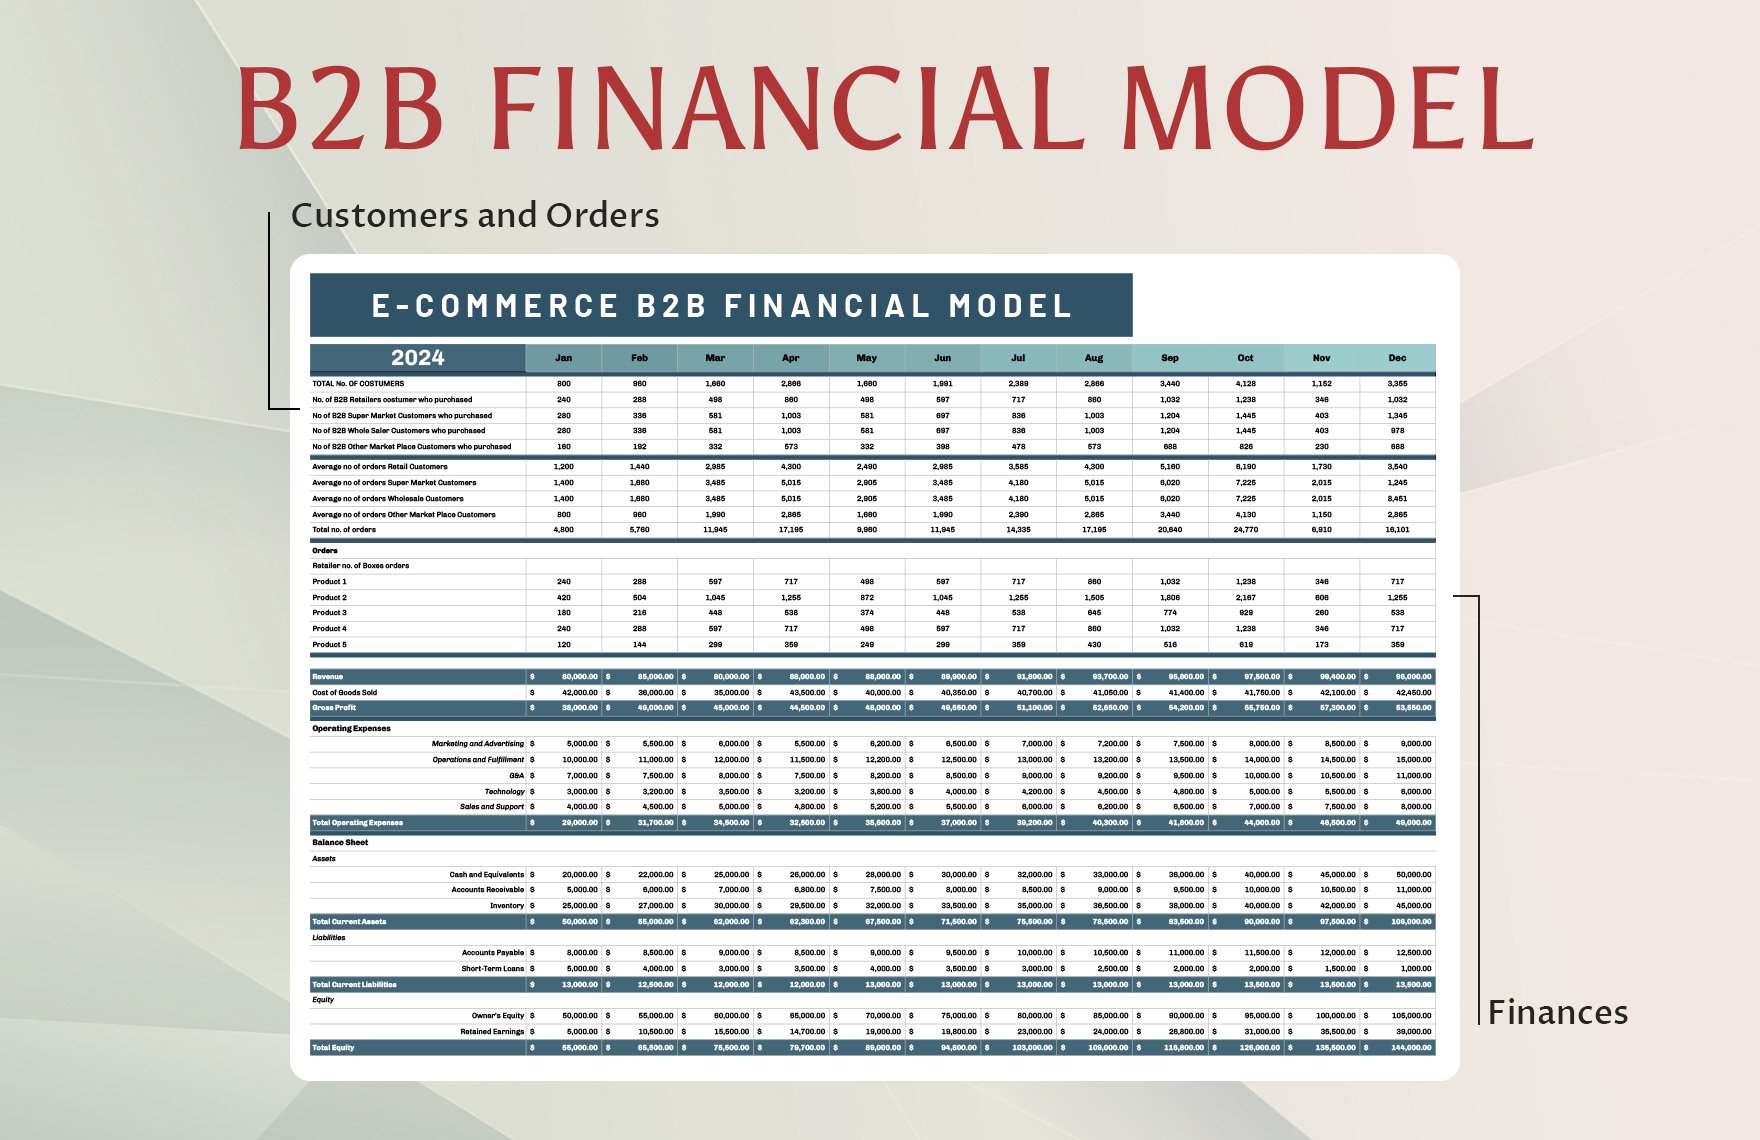 E-commerce B2B Financial Model Template